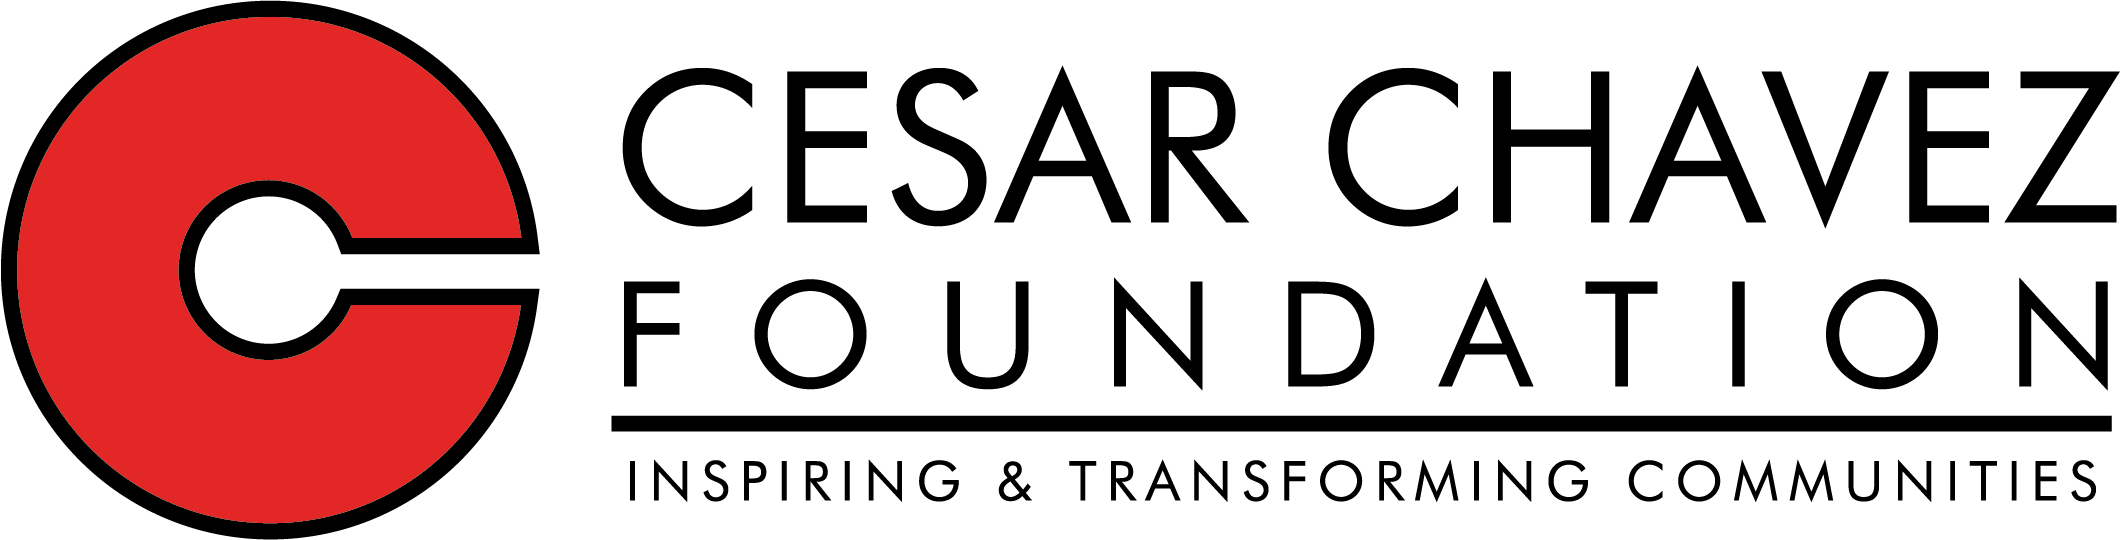 Cesar Chavez Foundation logo